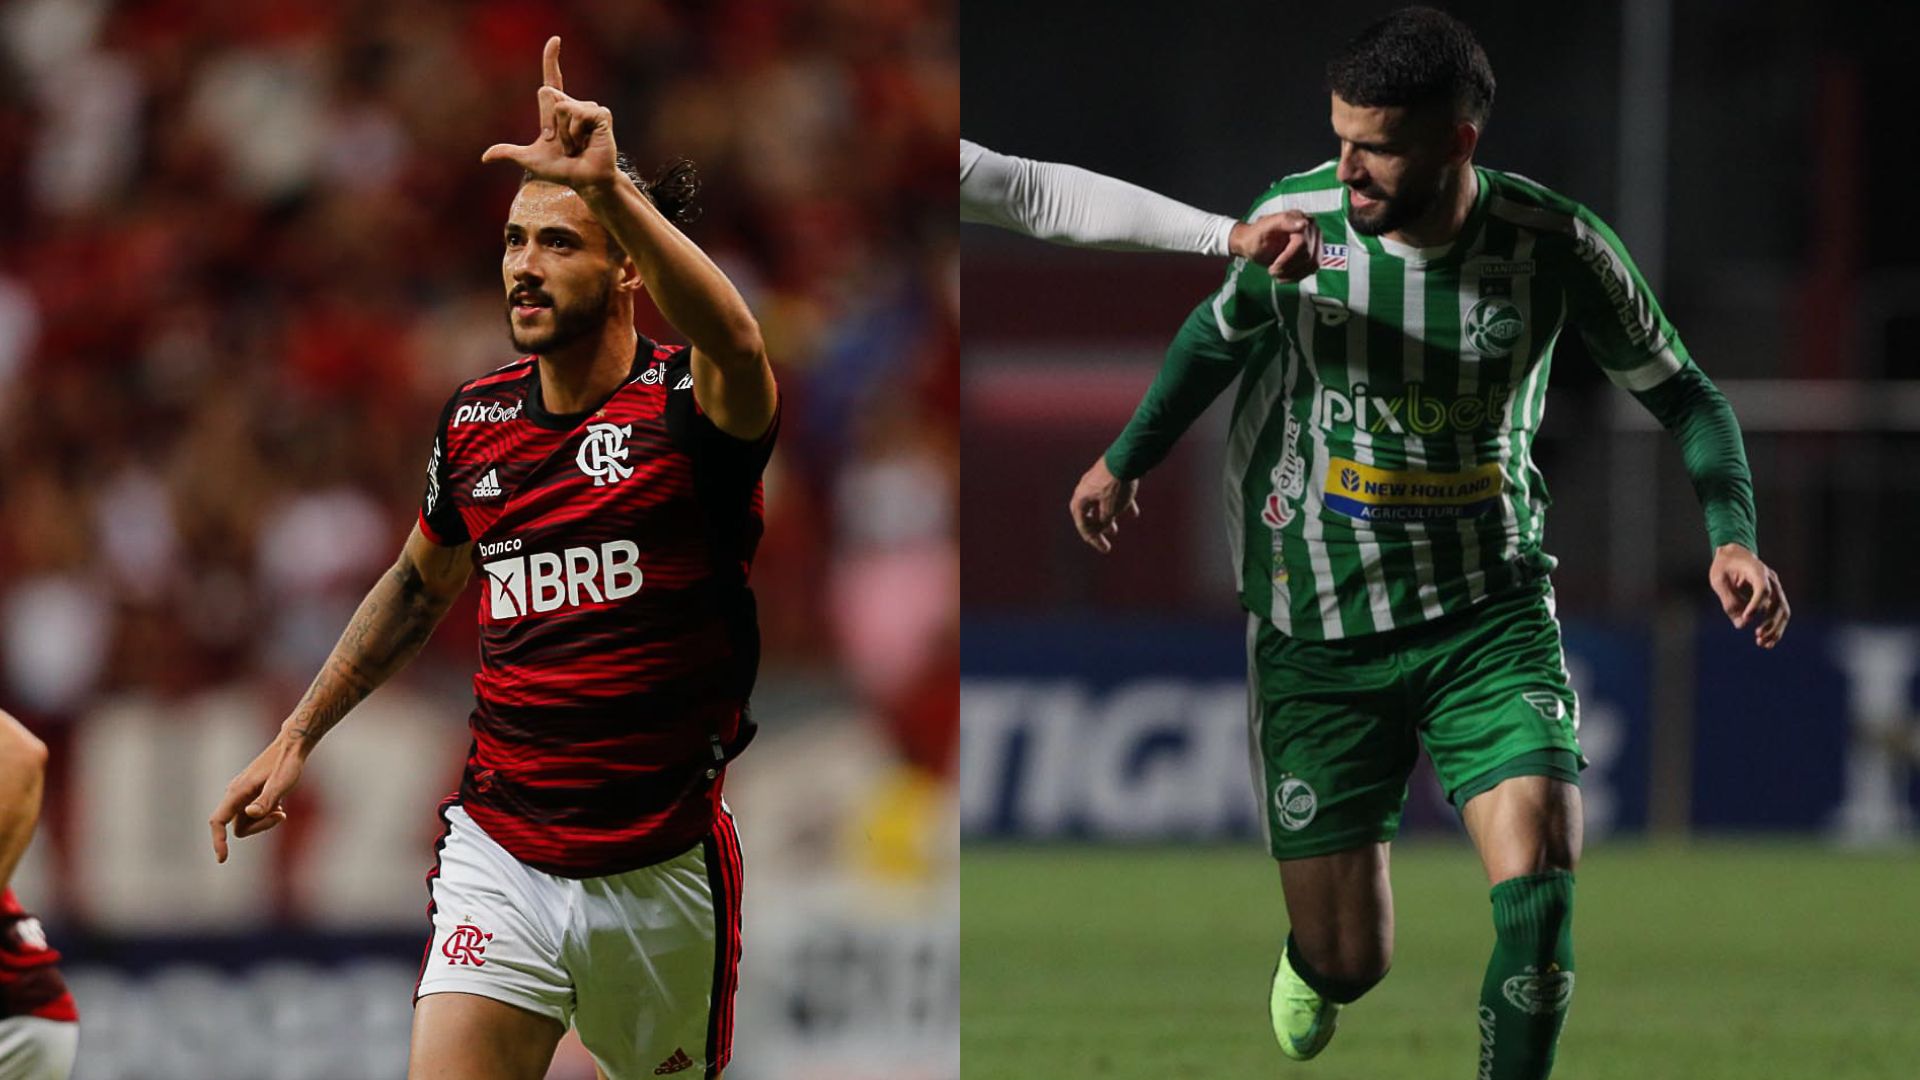 Tombense vs Criciúma: A Clash of Giants in Brazilian Football